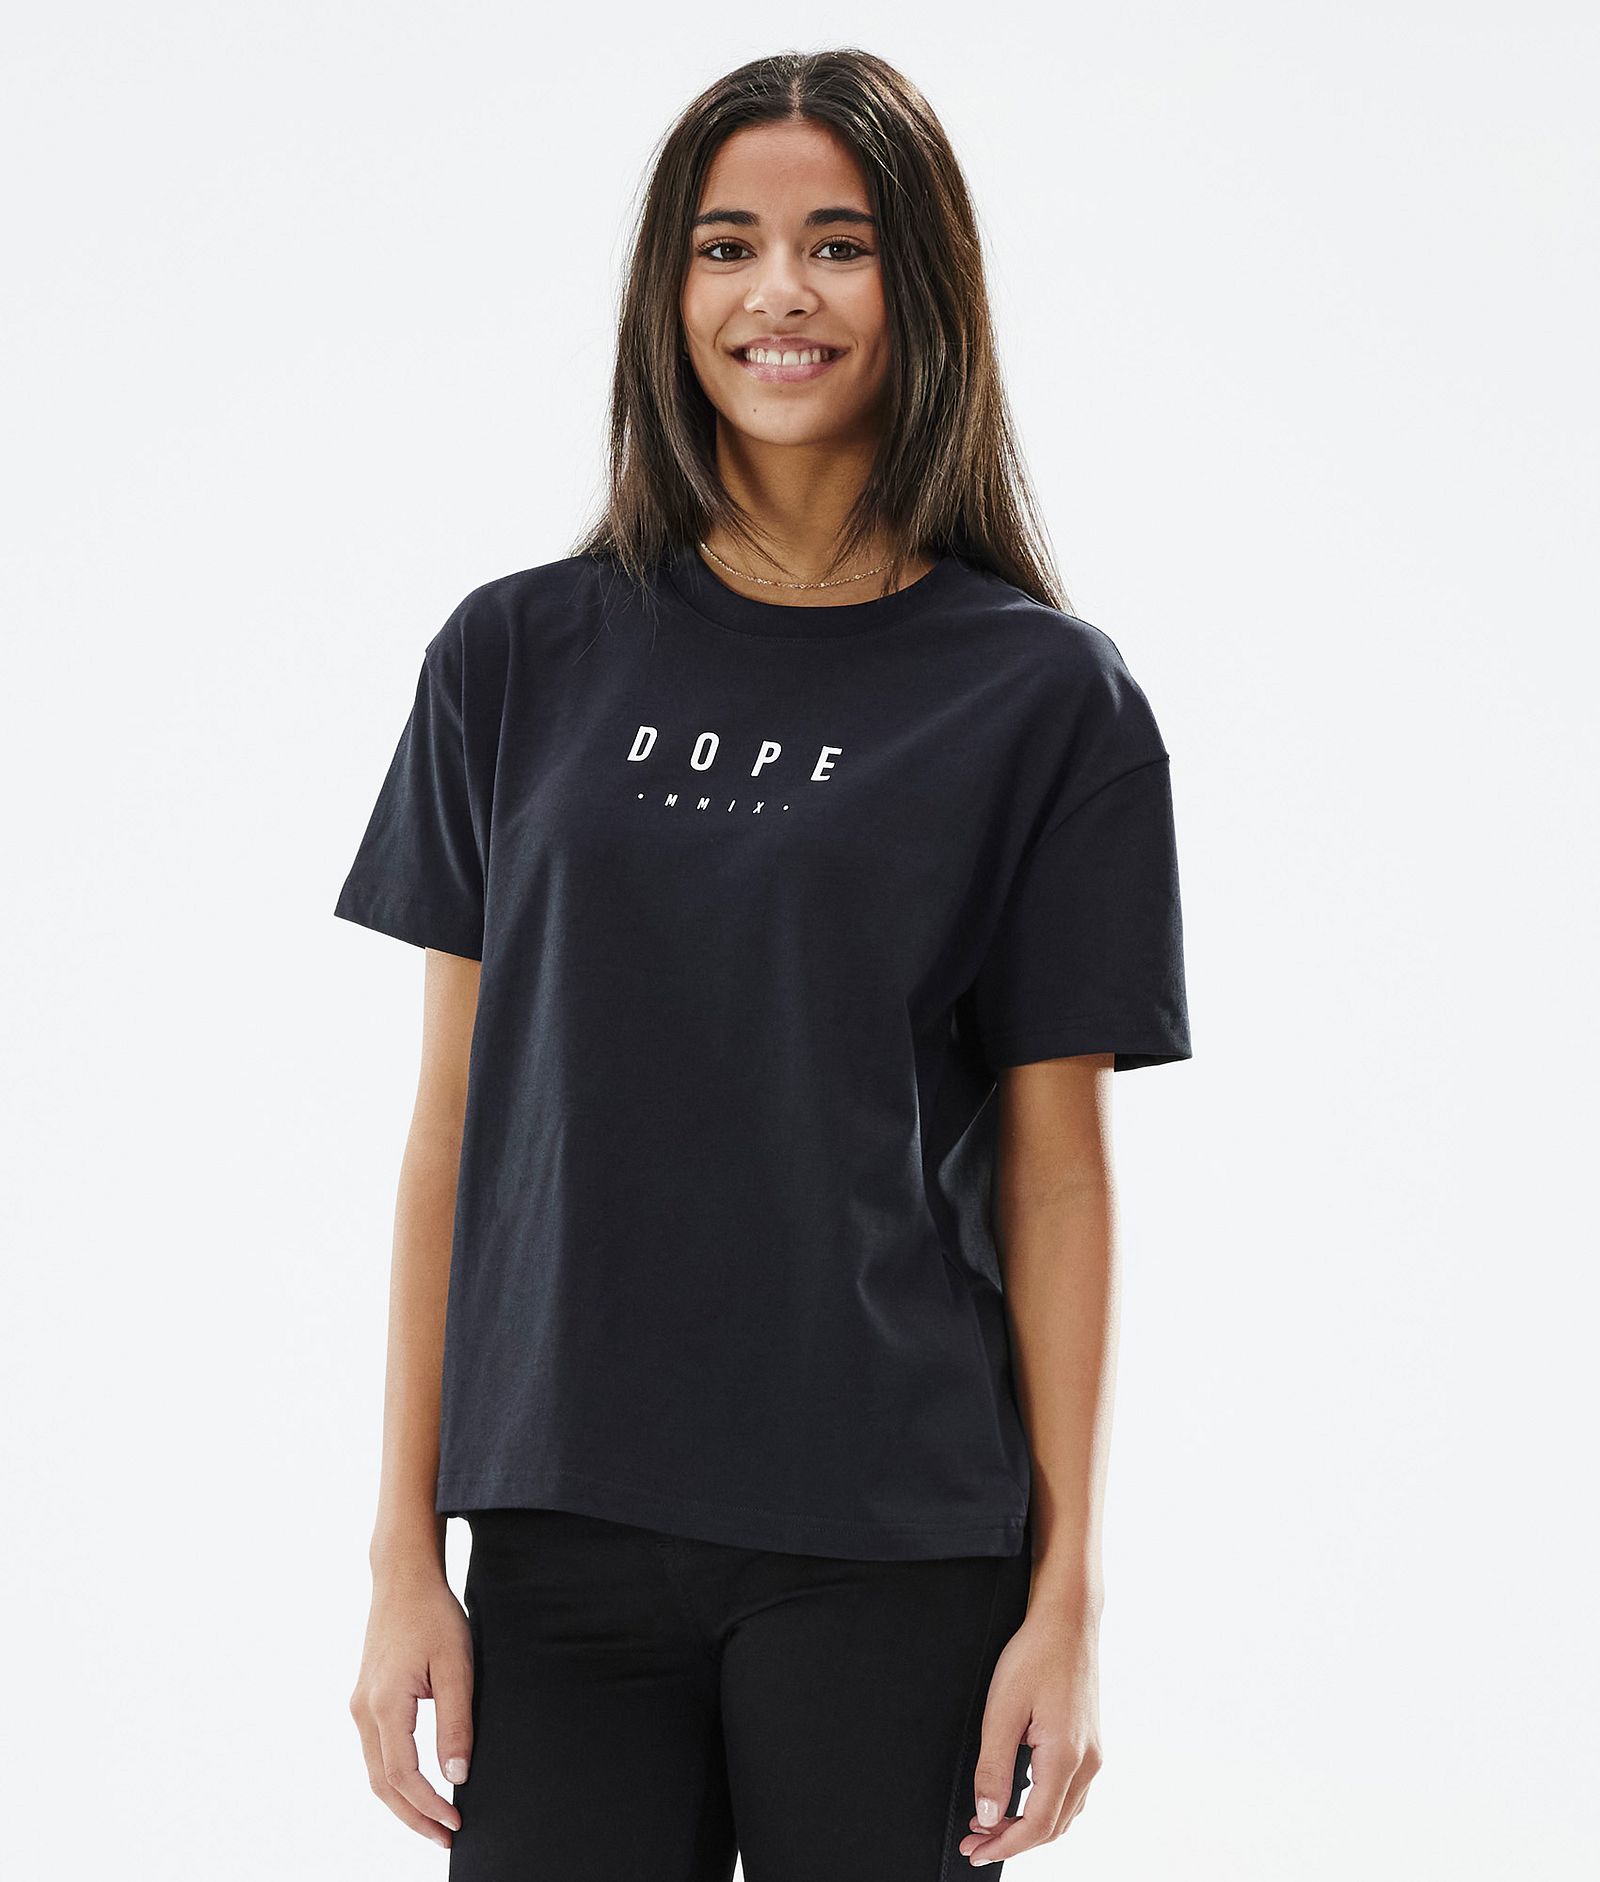 Standard W 2022 T-shirt Kobiety Peak Black